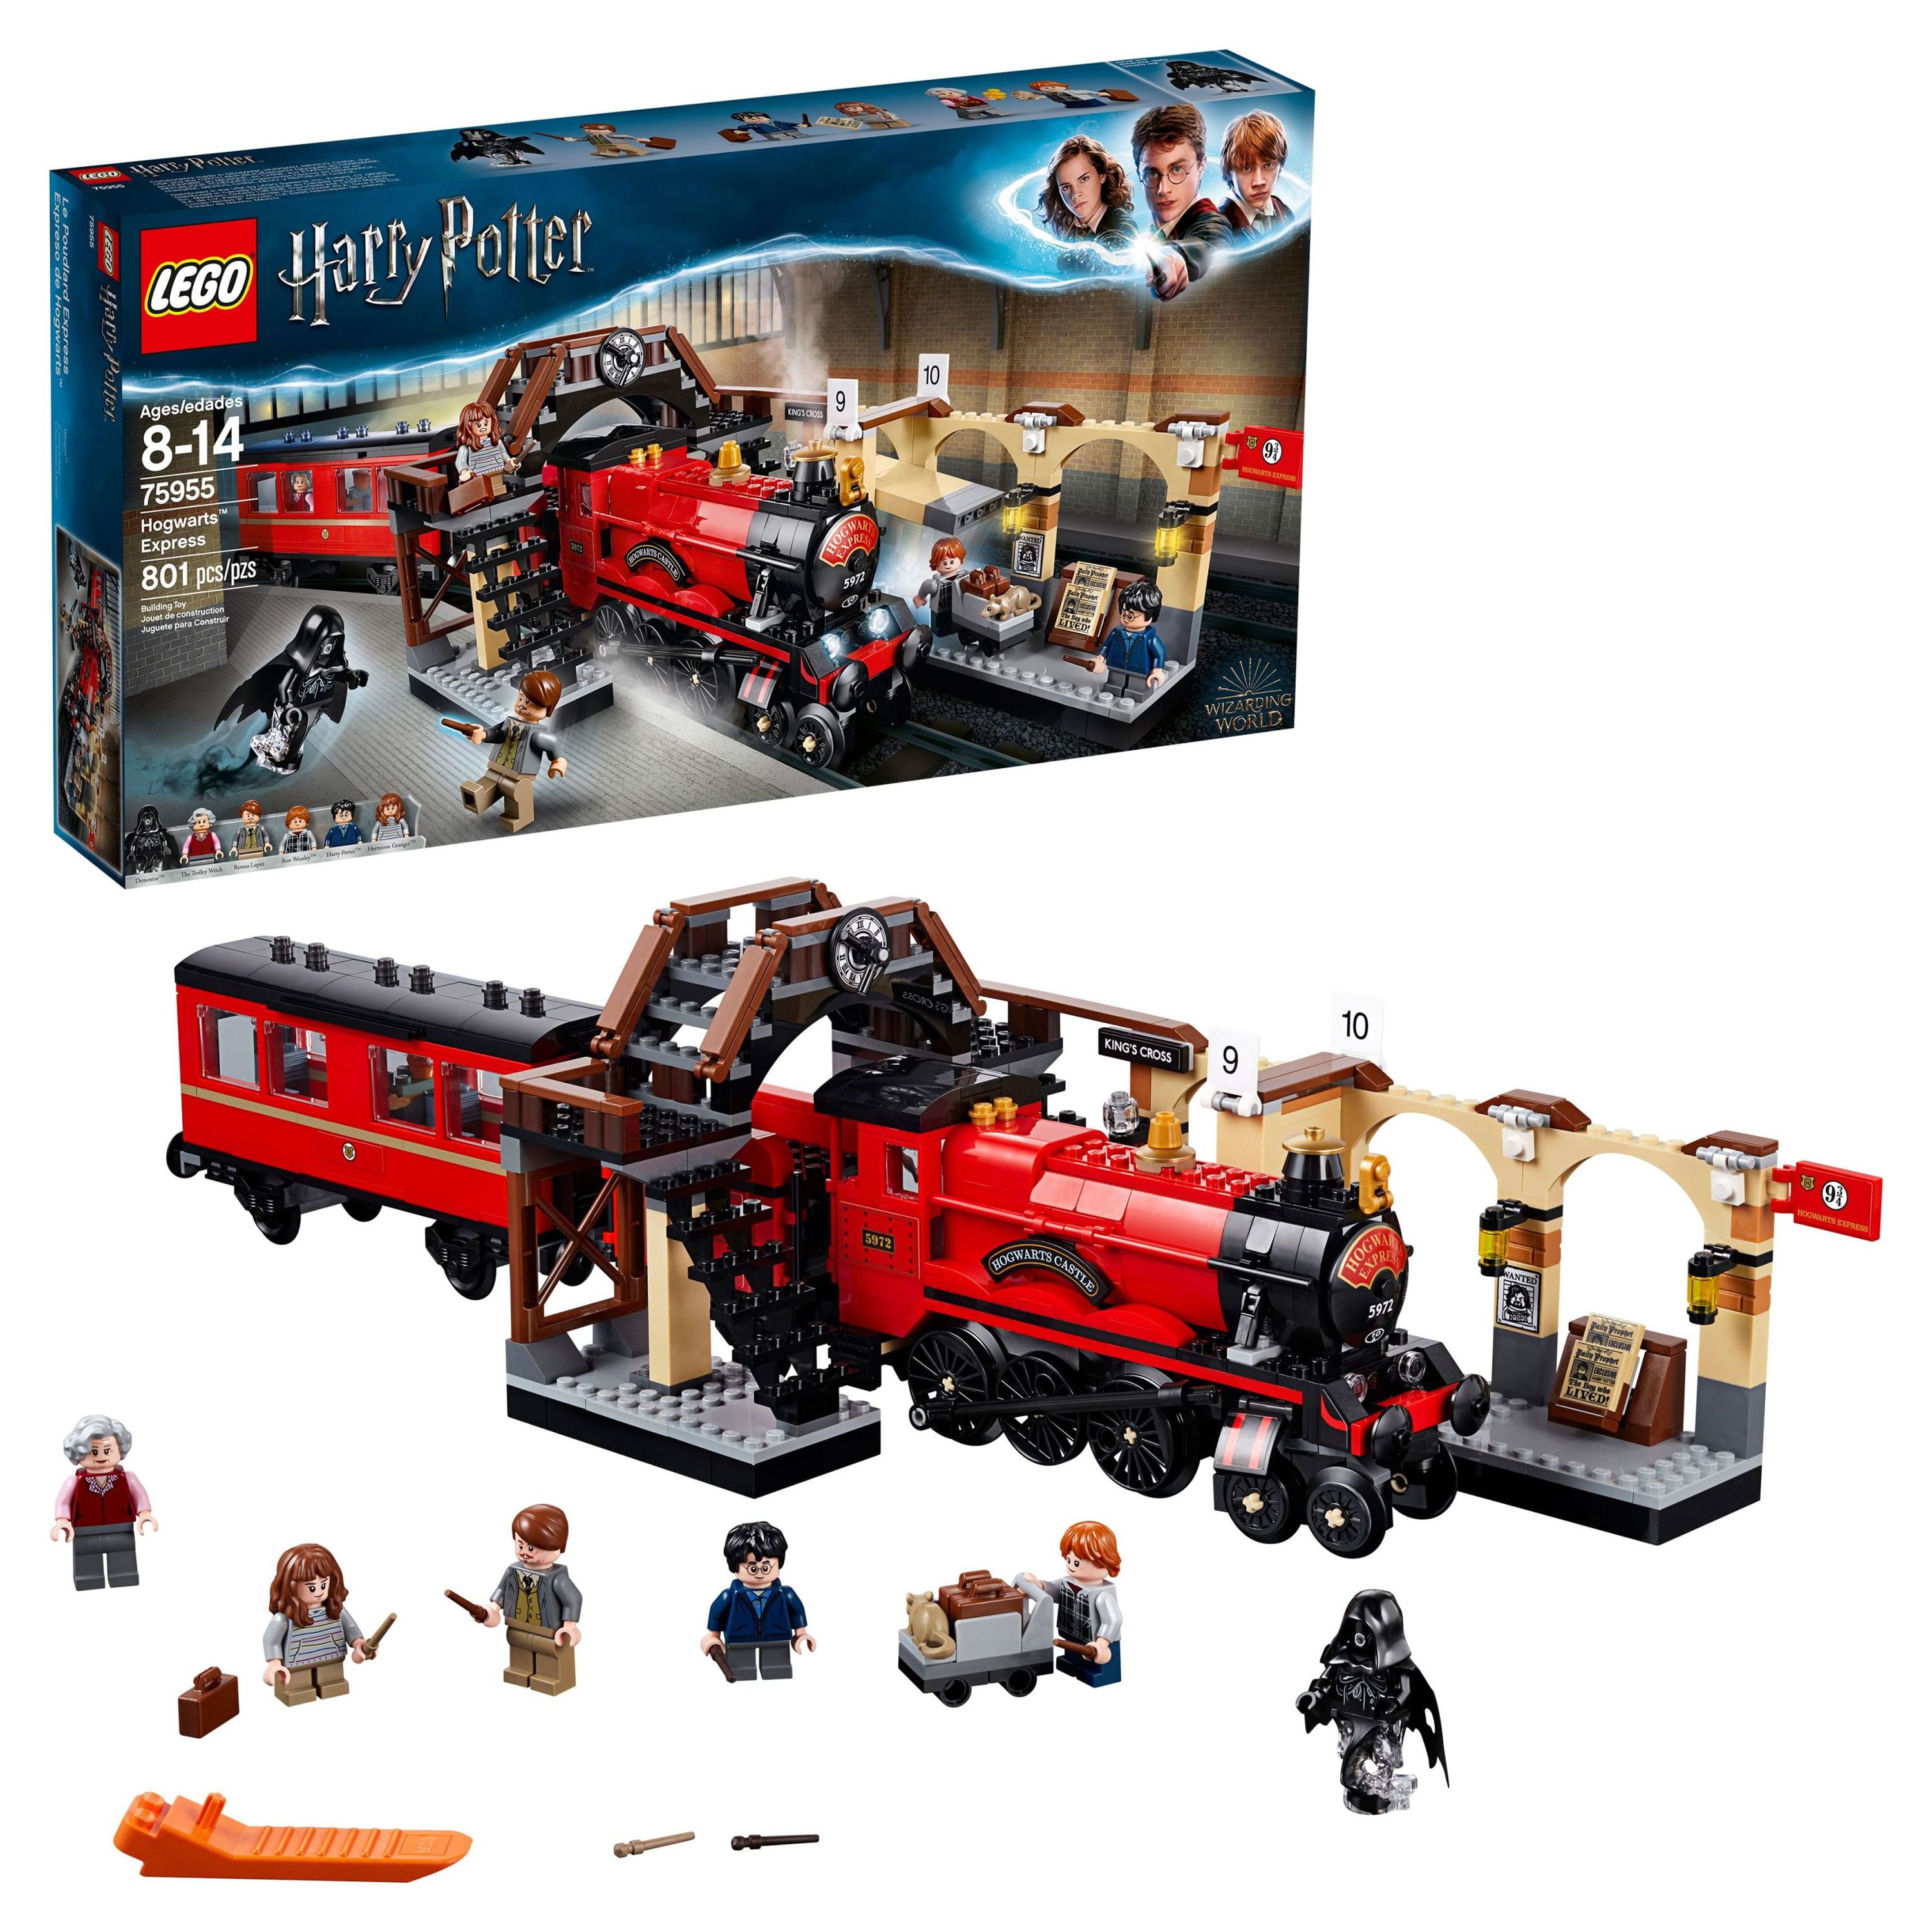 LEGO Harry Potter Hogwarts Express 75955 Toy Model Train Building Set - image 1 of 5